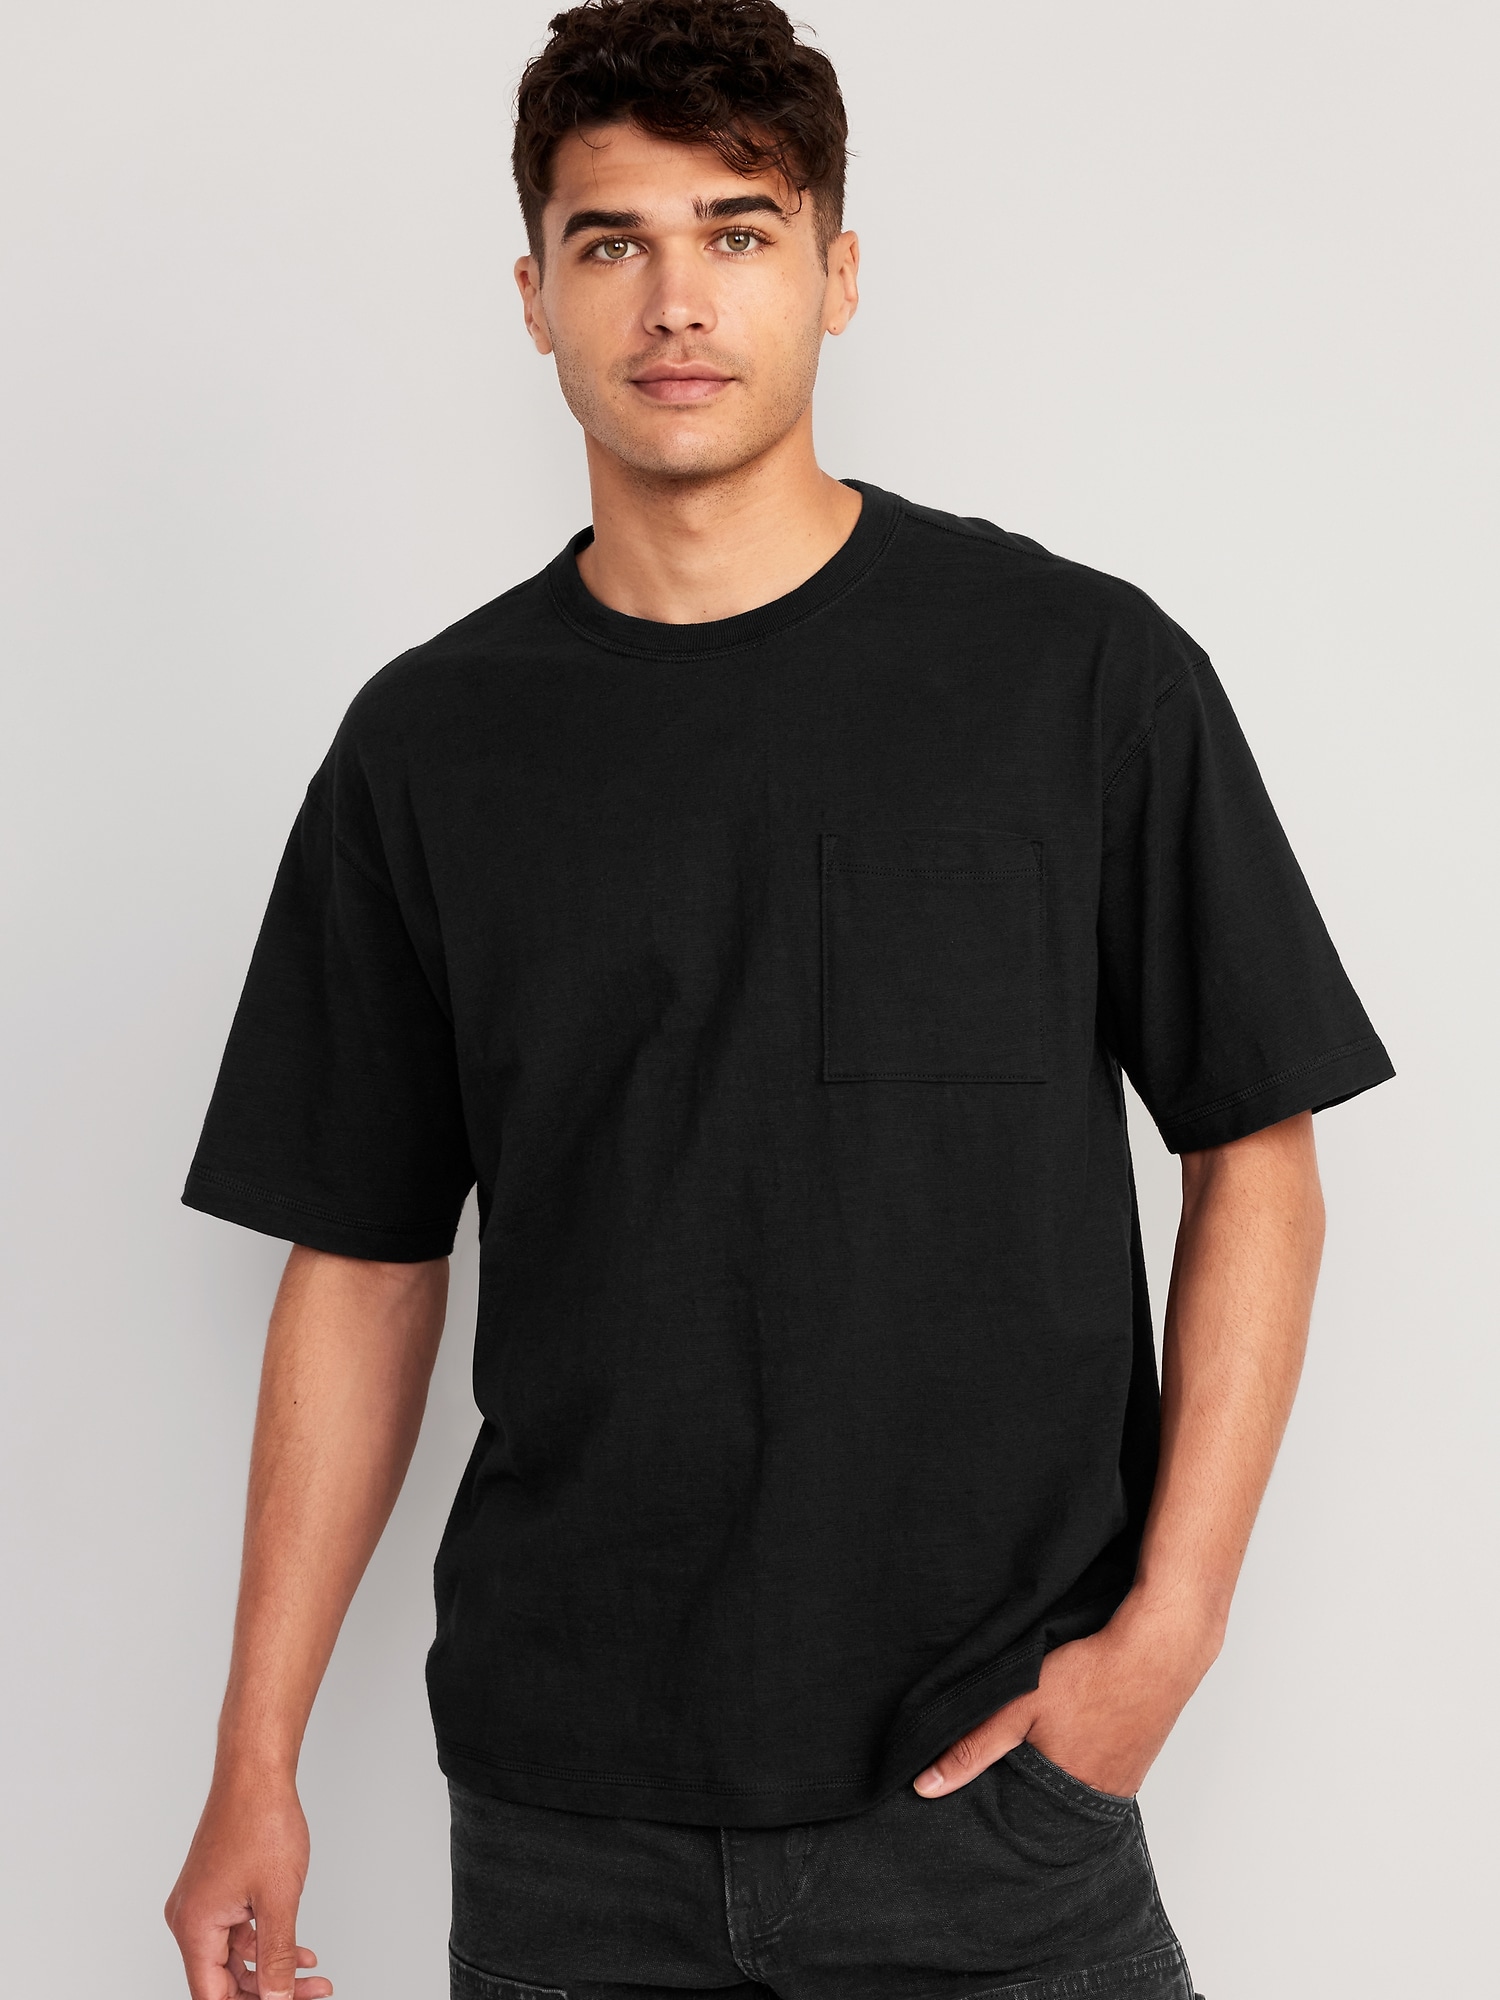 Slub-Knit Pocket T-Shirt for Men | Old Navy